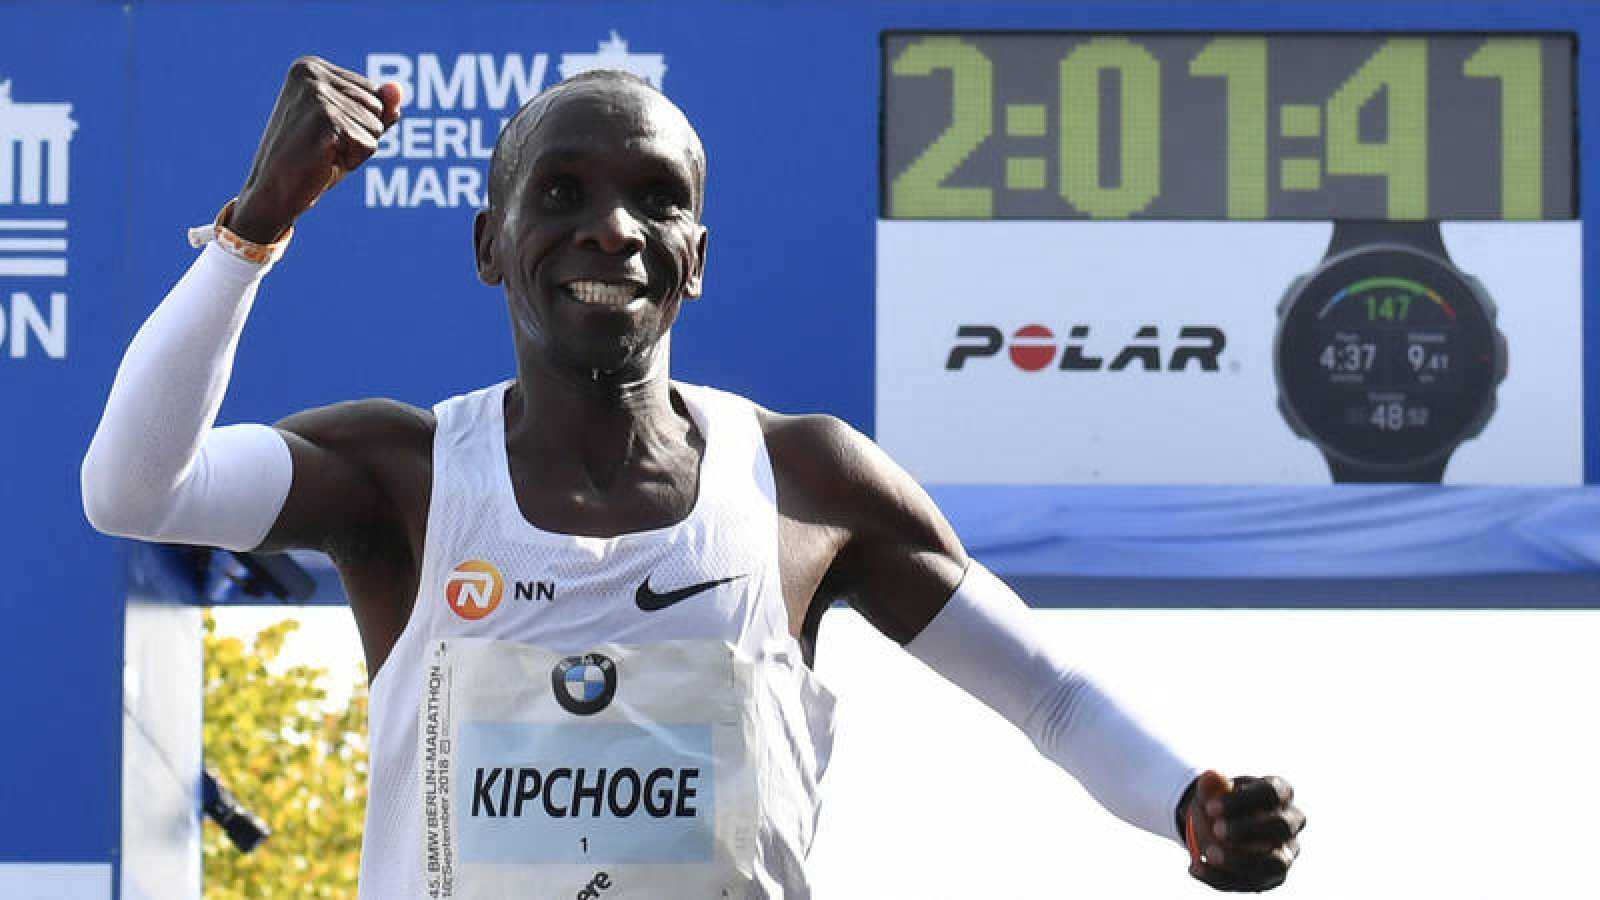 Eliud Kipchoge maraton de berlin record mundial